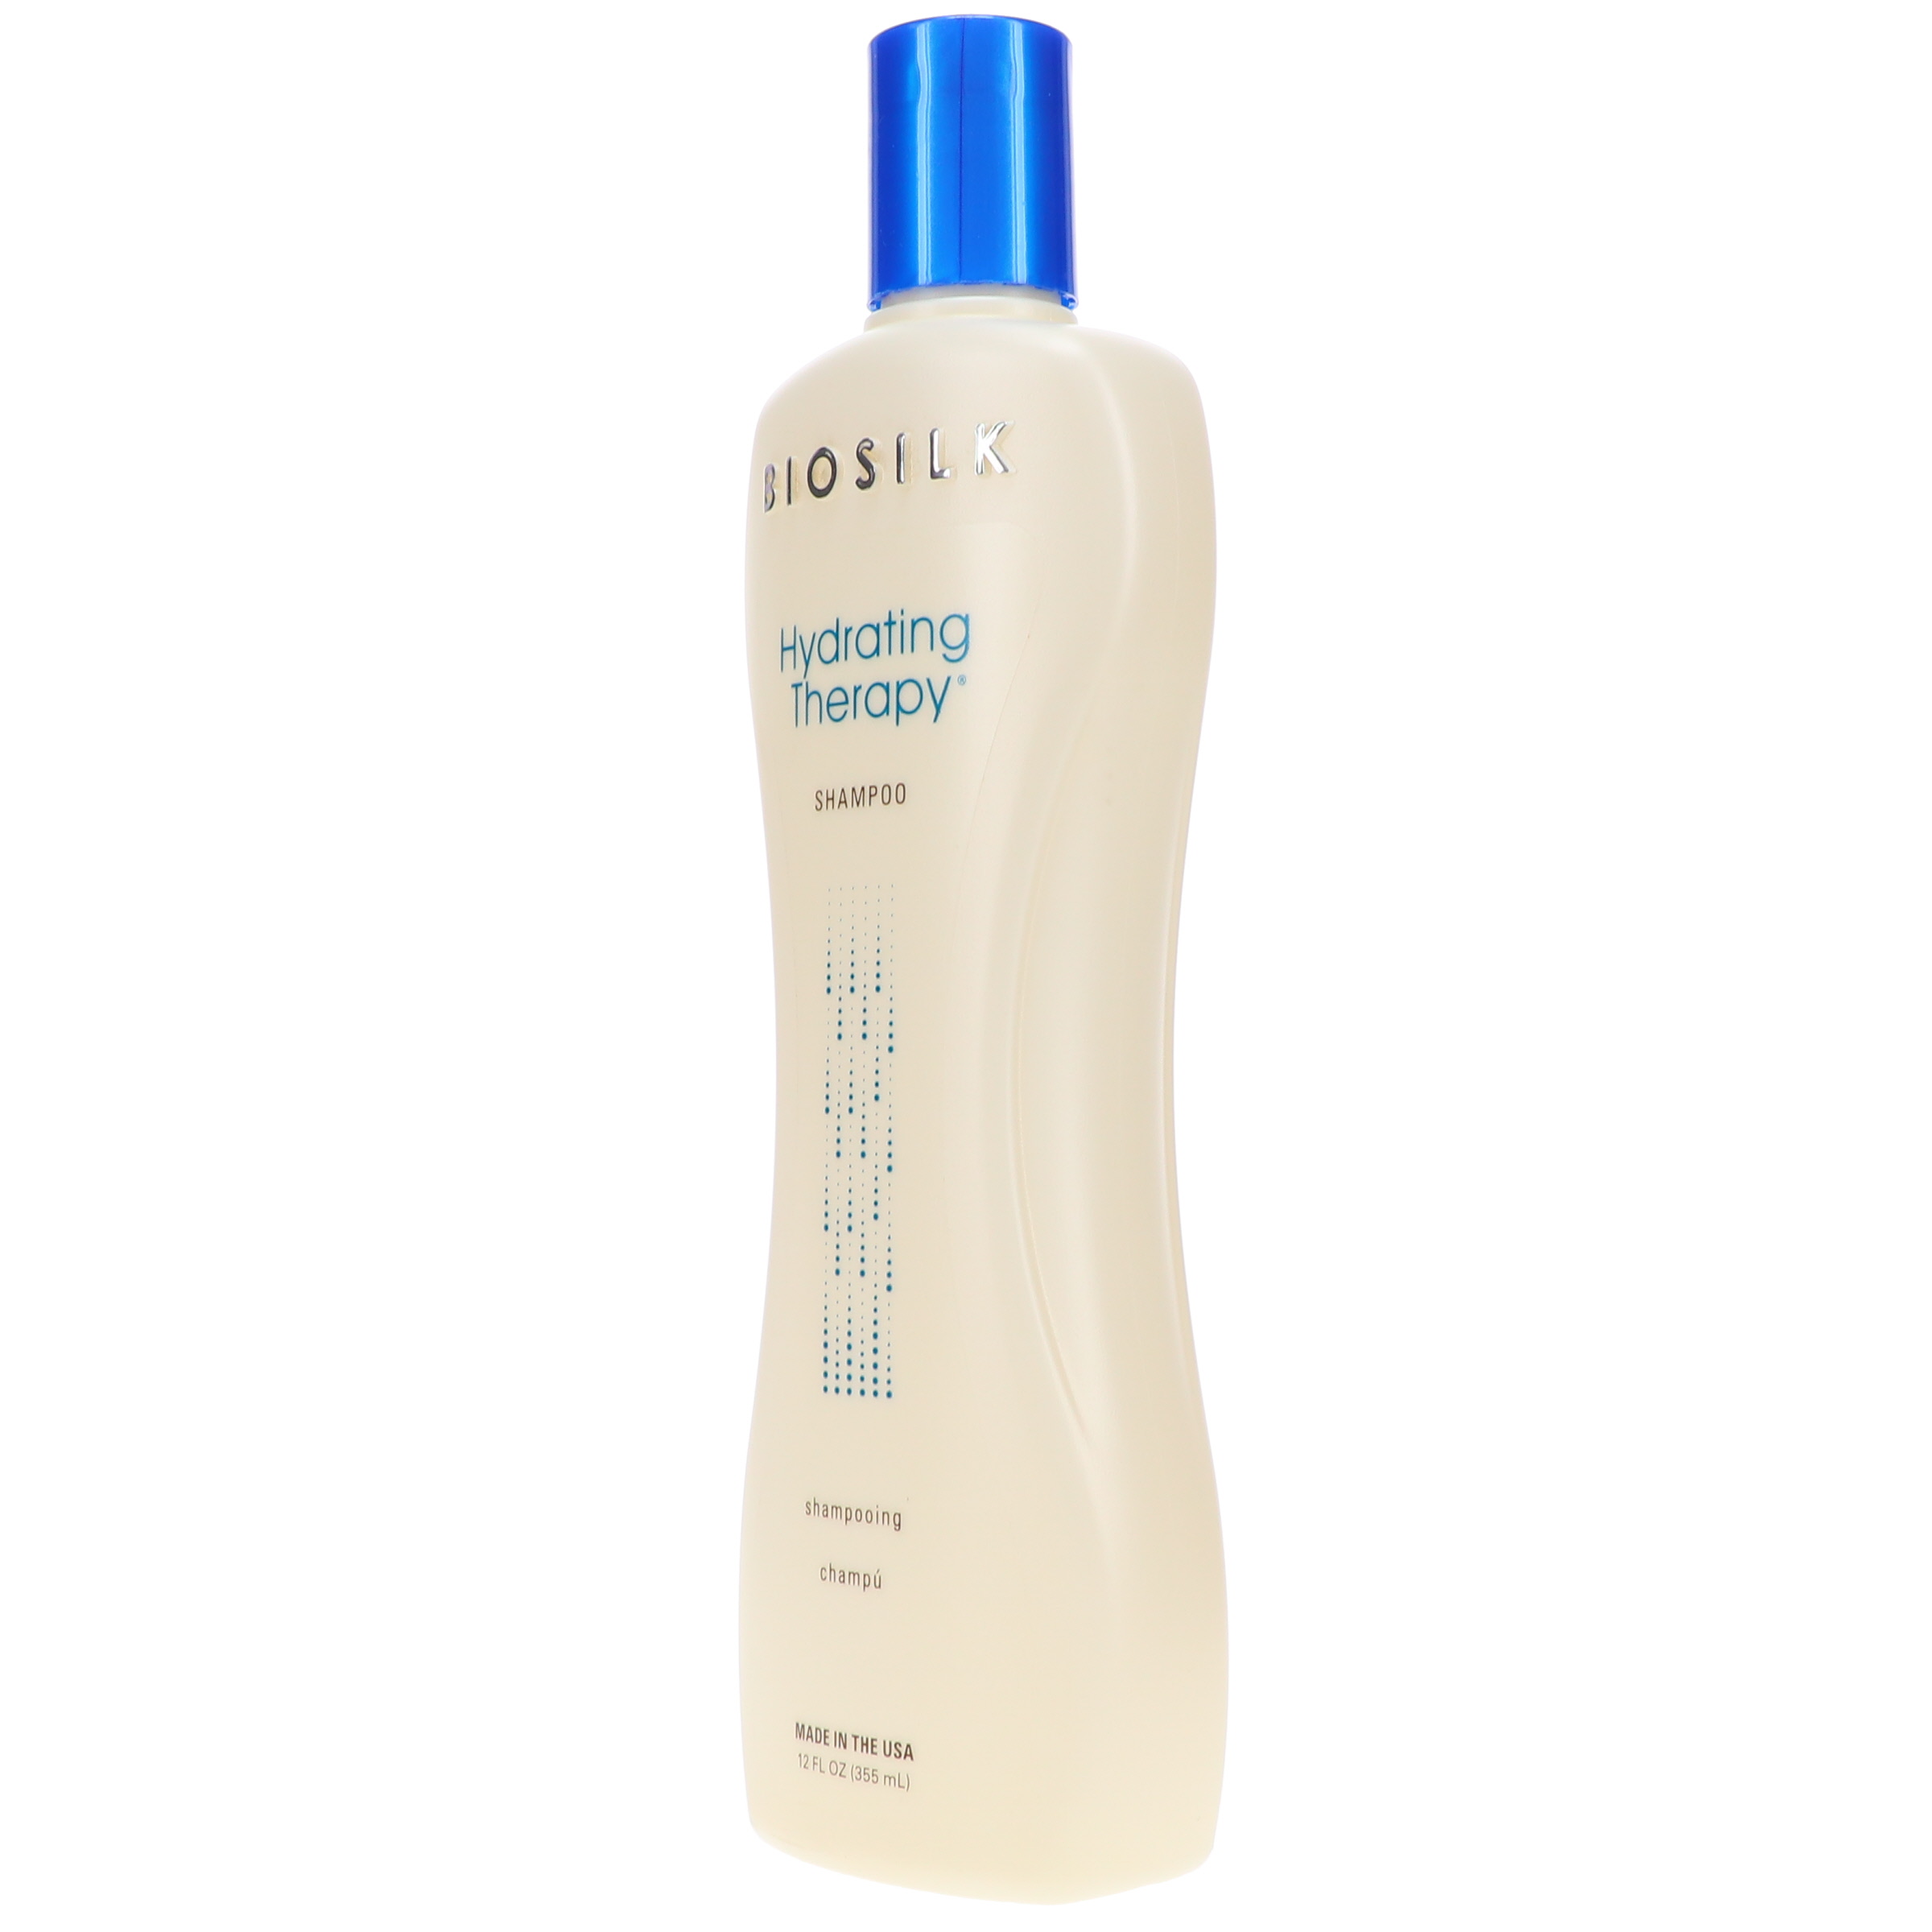 Biosilk Hydrating Therapy Shampoo 12 oz - image 2 of 8